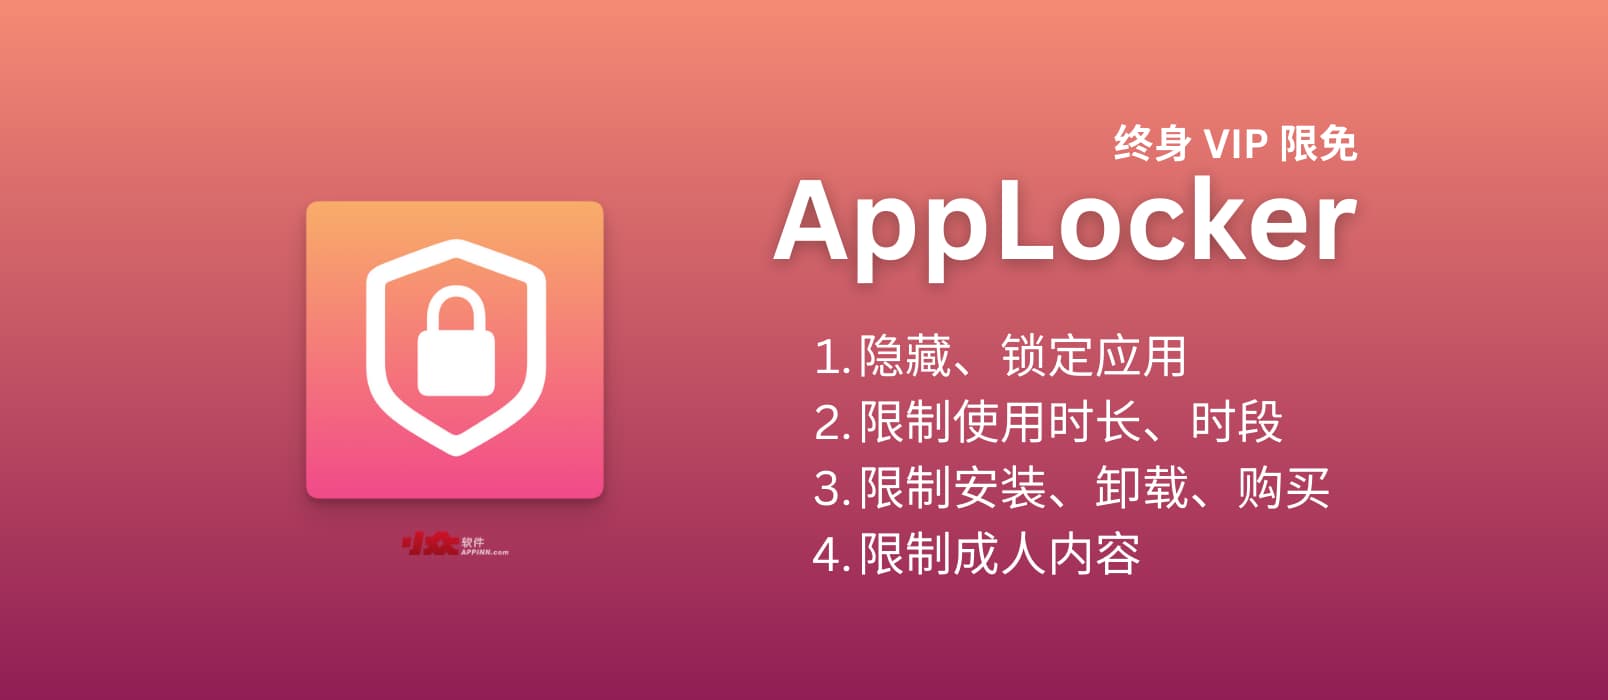 AALocker - 隐藏应用不再安卓专属，苹果用户也可以拥有了，终身 VIP 内购限免[iPhone/iPad]